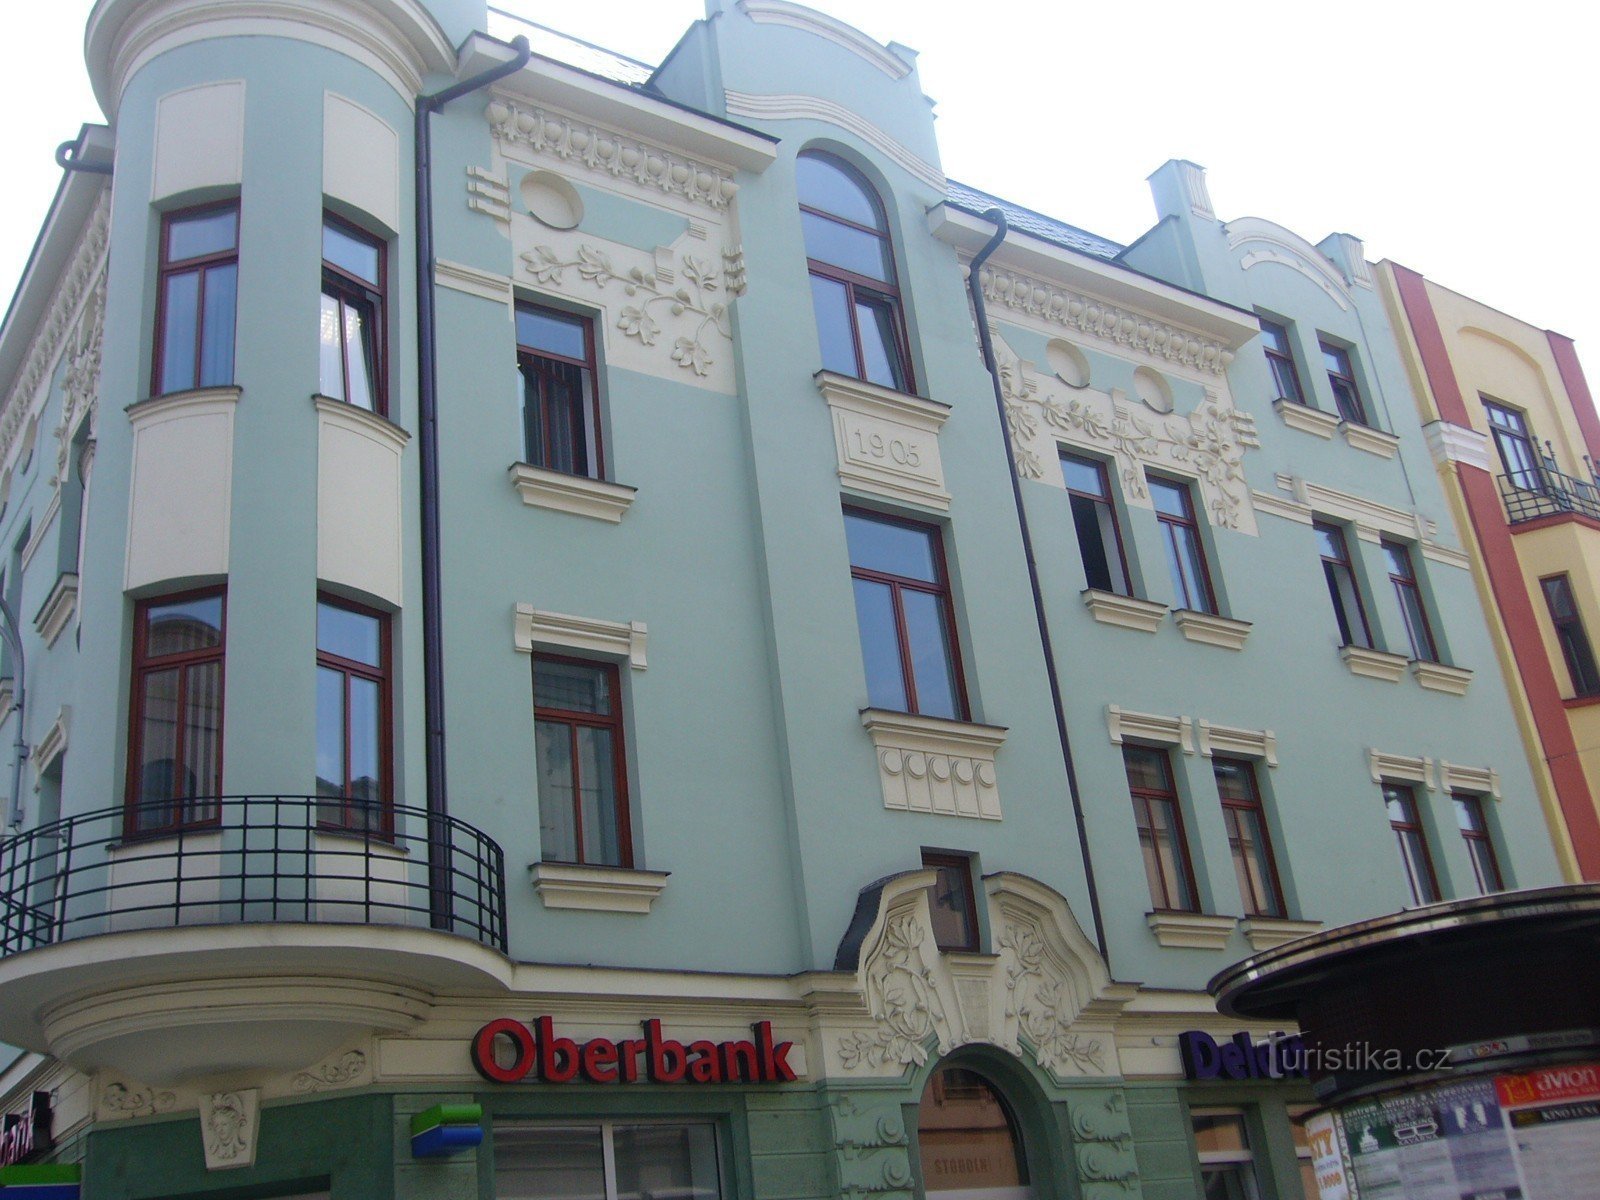 Art Nouveau-huis op de hoek van de straten Nádražní en Stodolní